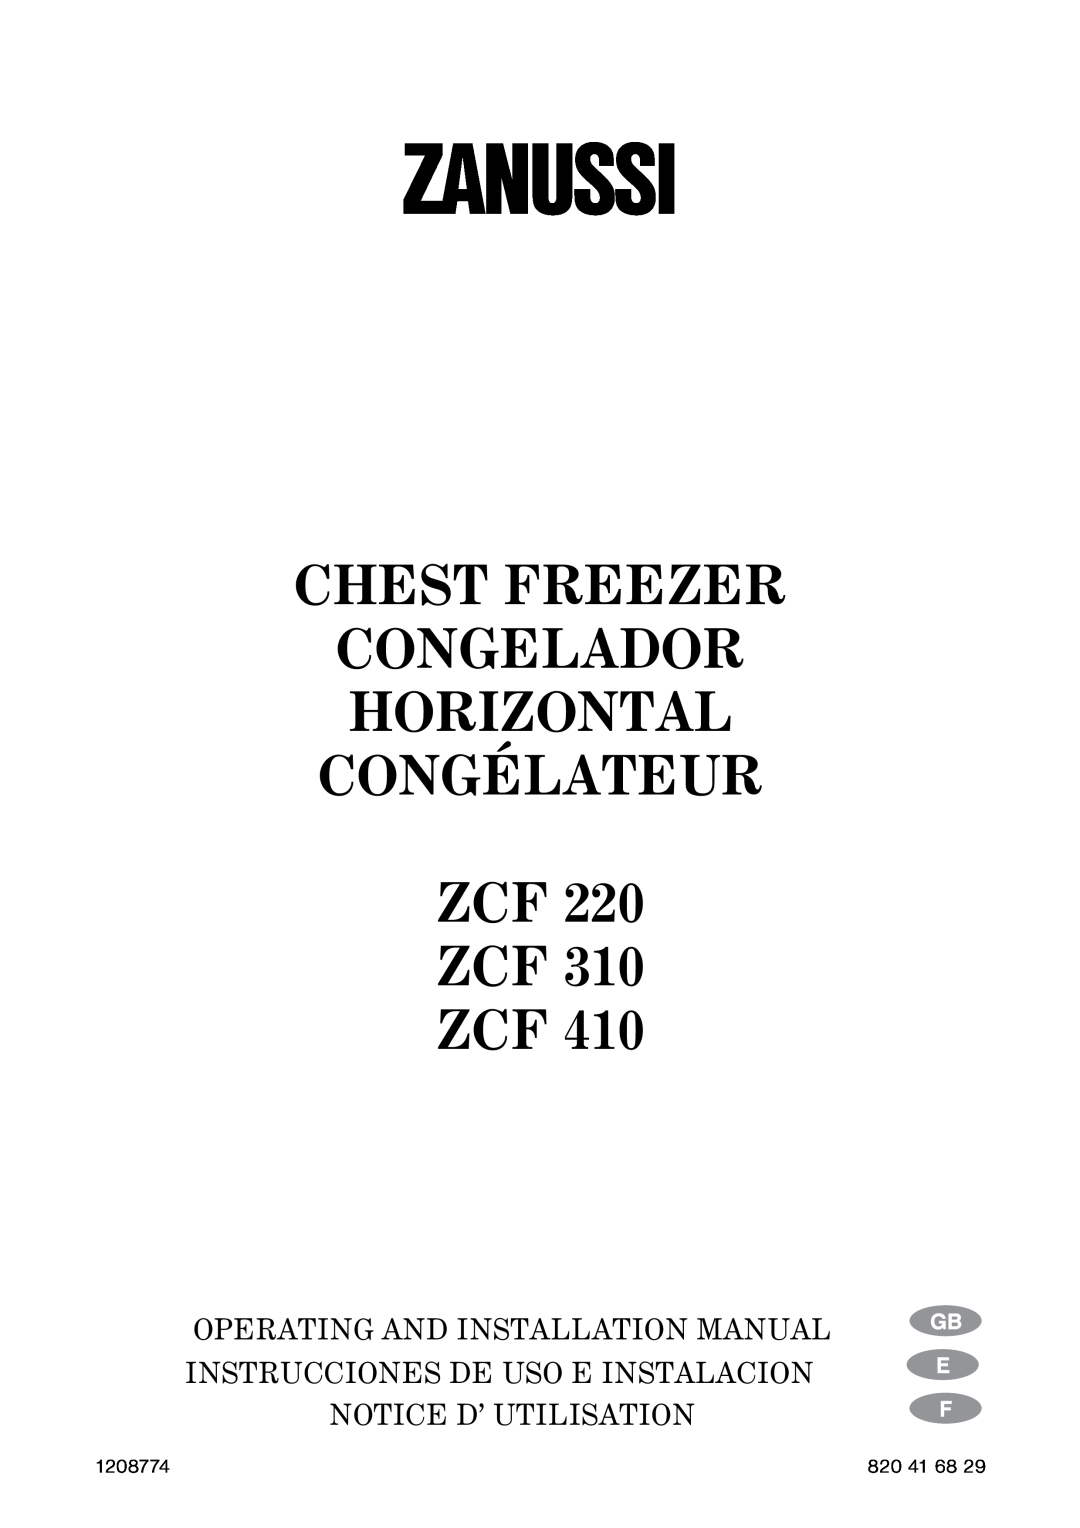 Zanussi ZCF 310 installation manual Zanussi, Chest Freezer Congelador Horizontal Congélateur, Zcf Zcf Zcf, 1208774, 820 